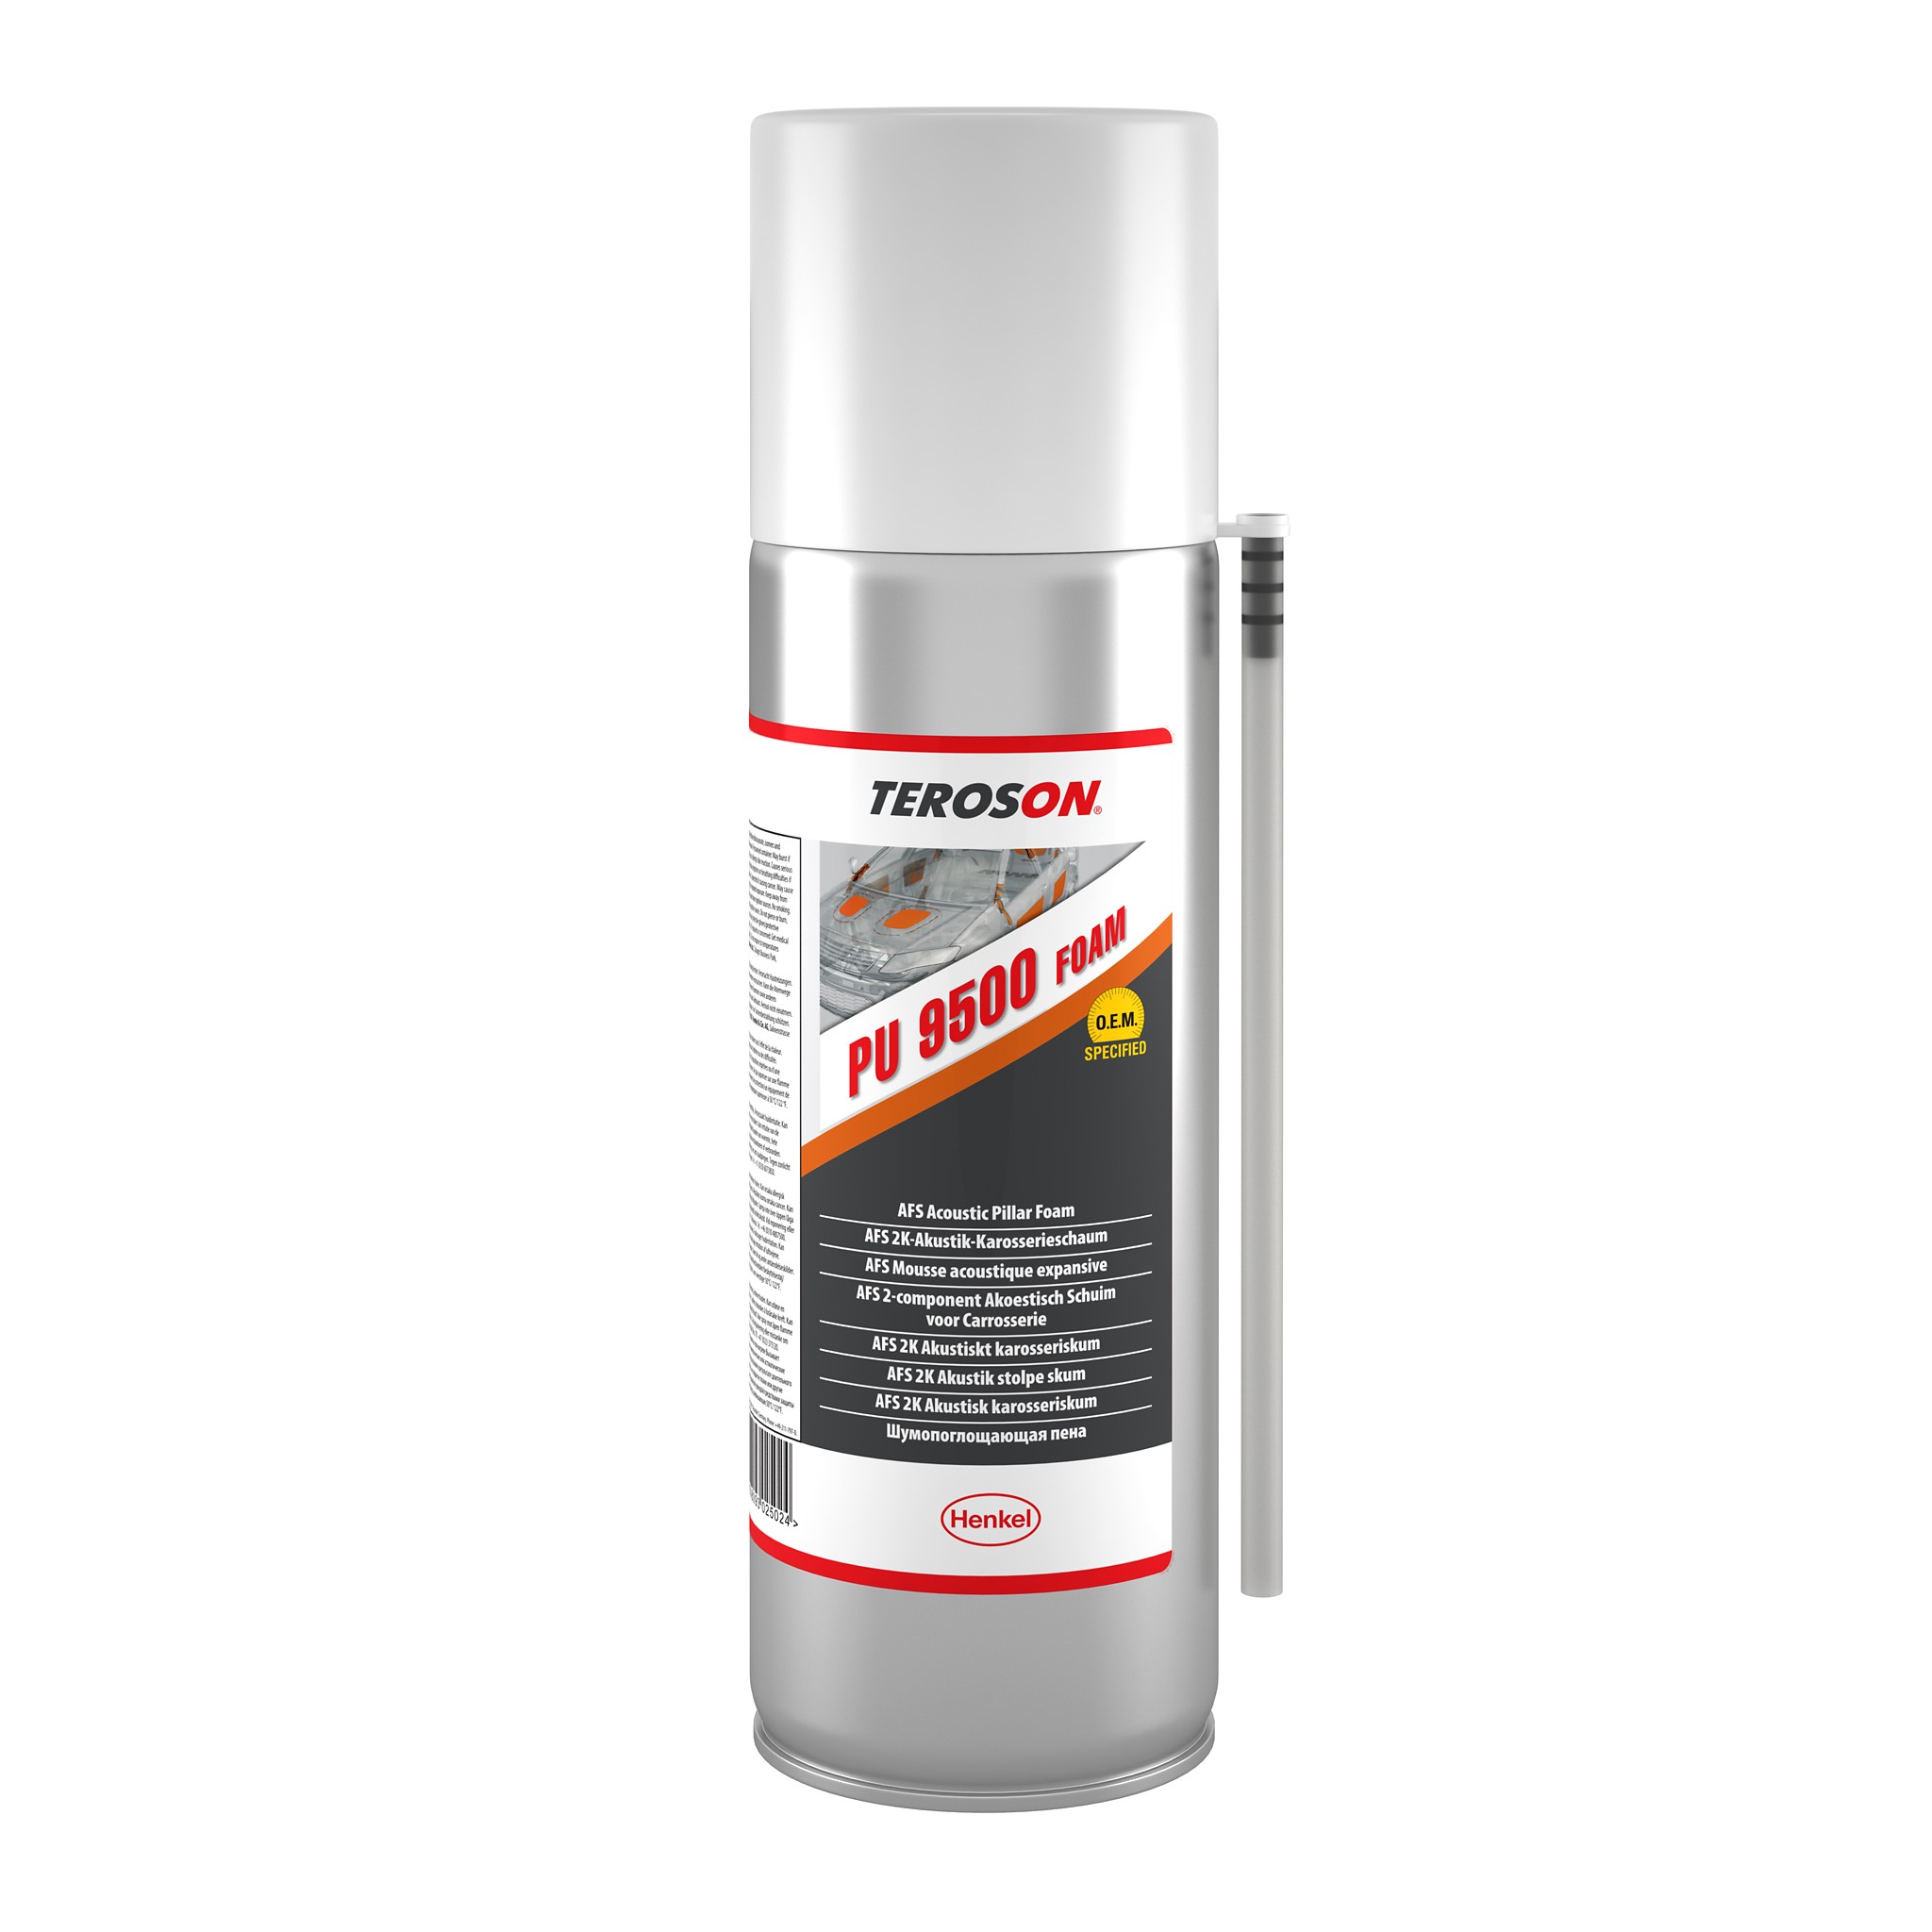 TEROSON PU 9500 FOAM – Dämmschaum zur Lärmbekämpfung - Henkel